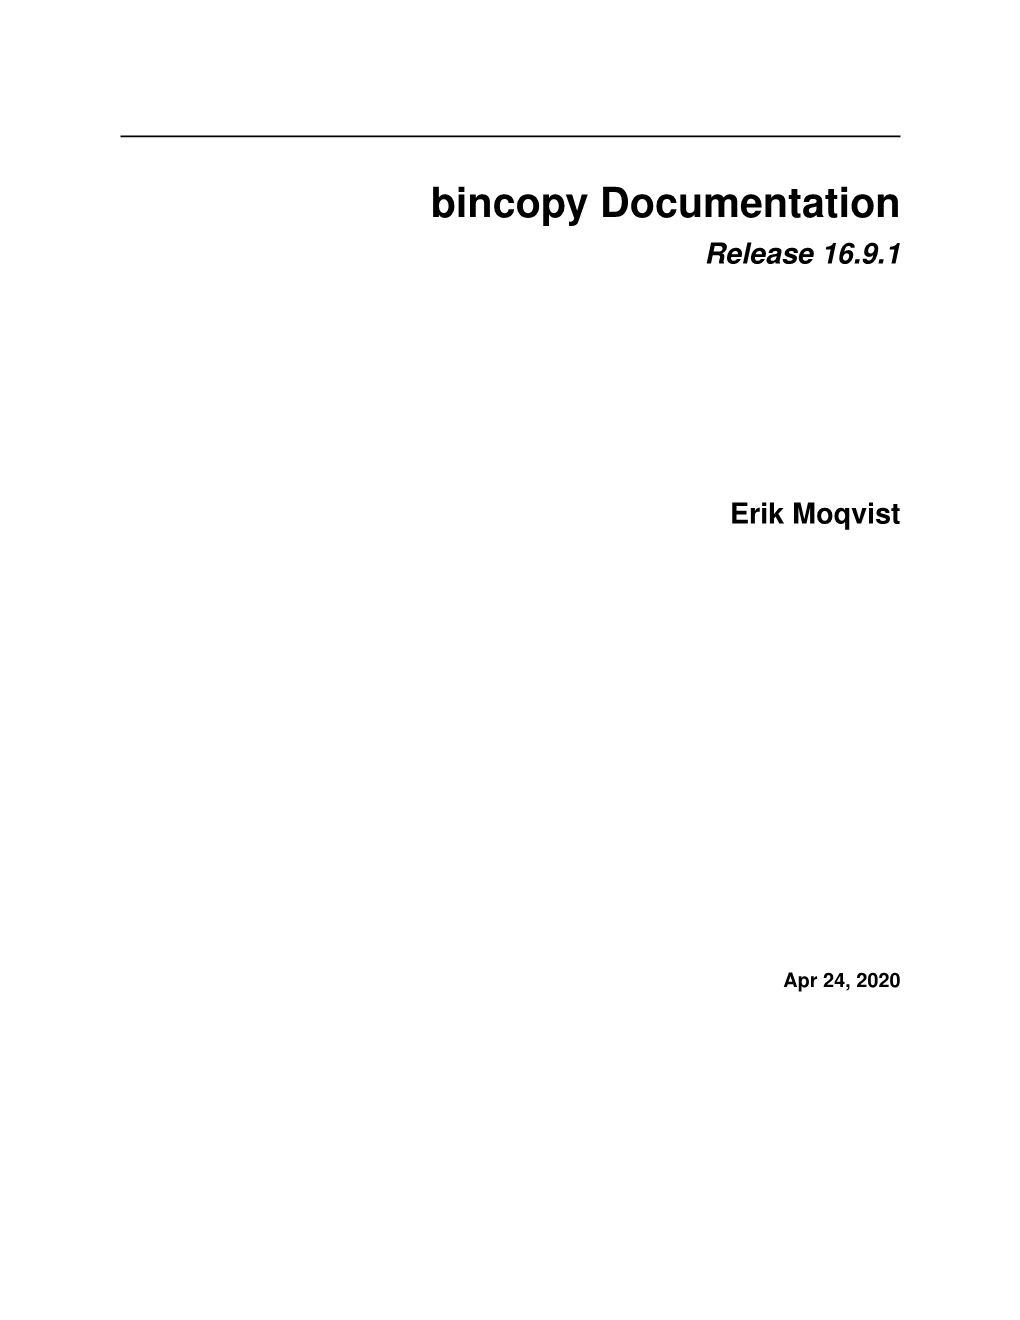 Bincopy Documentation Release 16.9.1